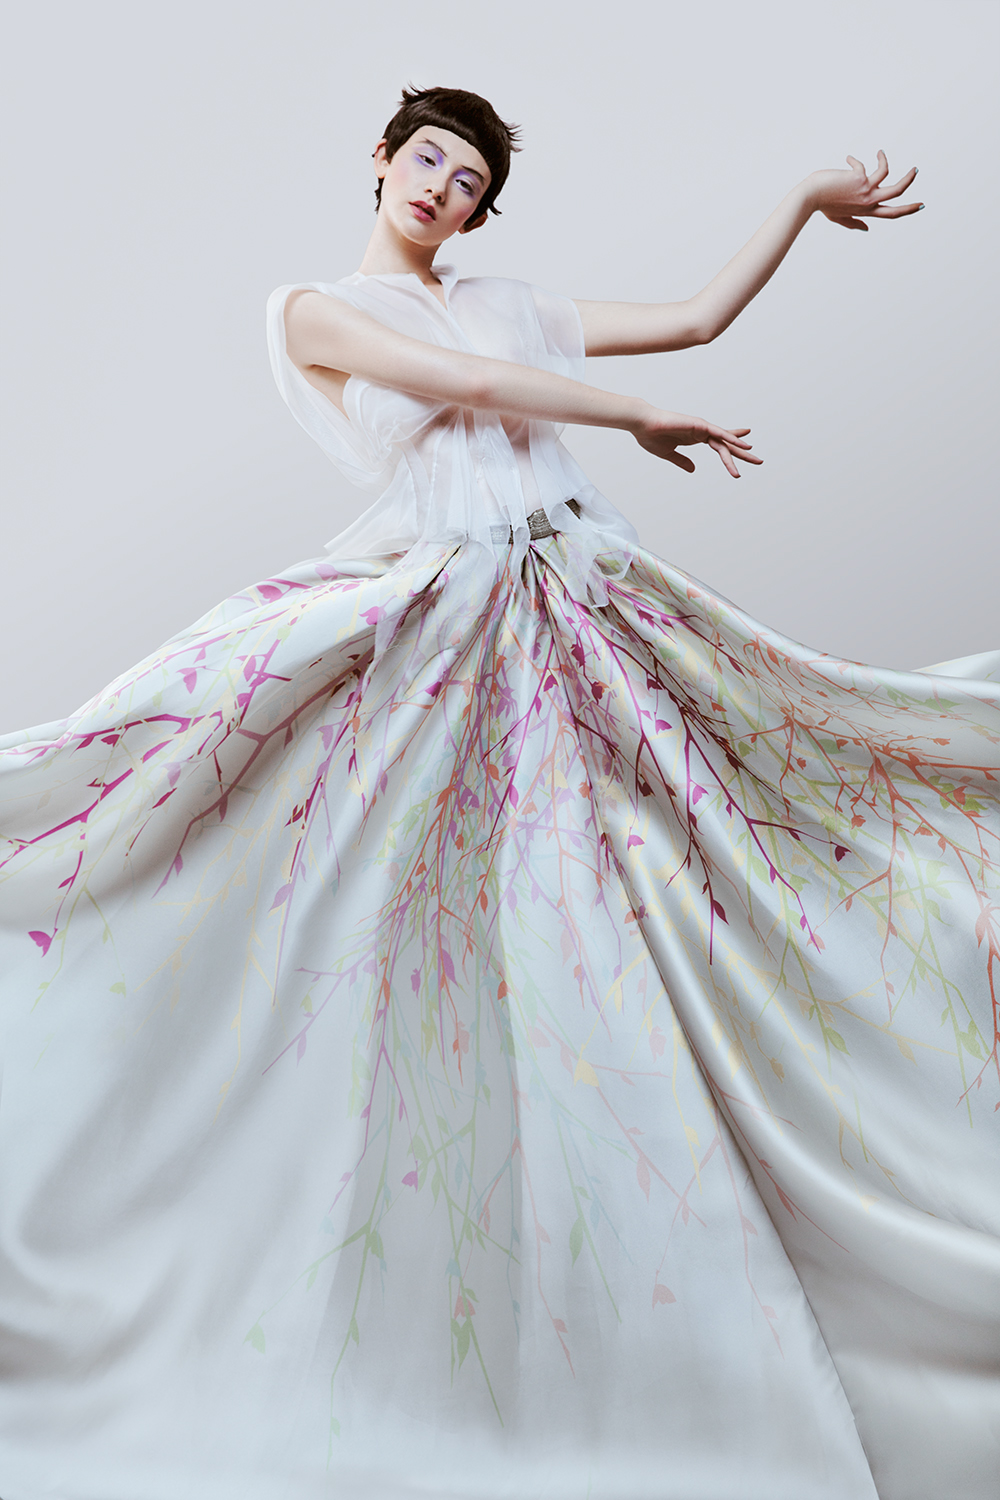 editorial flower Pastels asian sensual blossom Paris poetic beauty Original colors textures DANCE   classic fashion